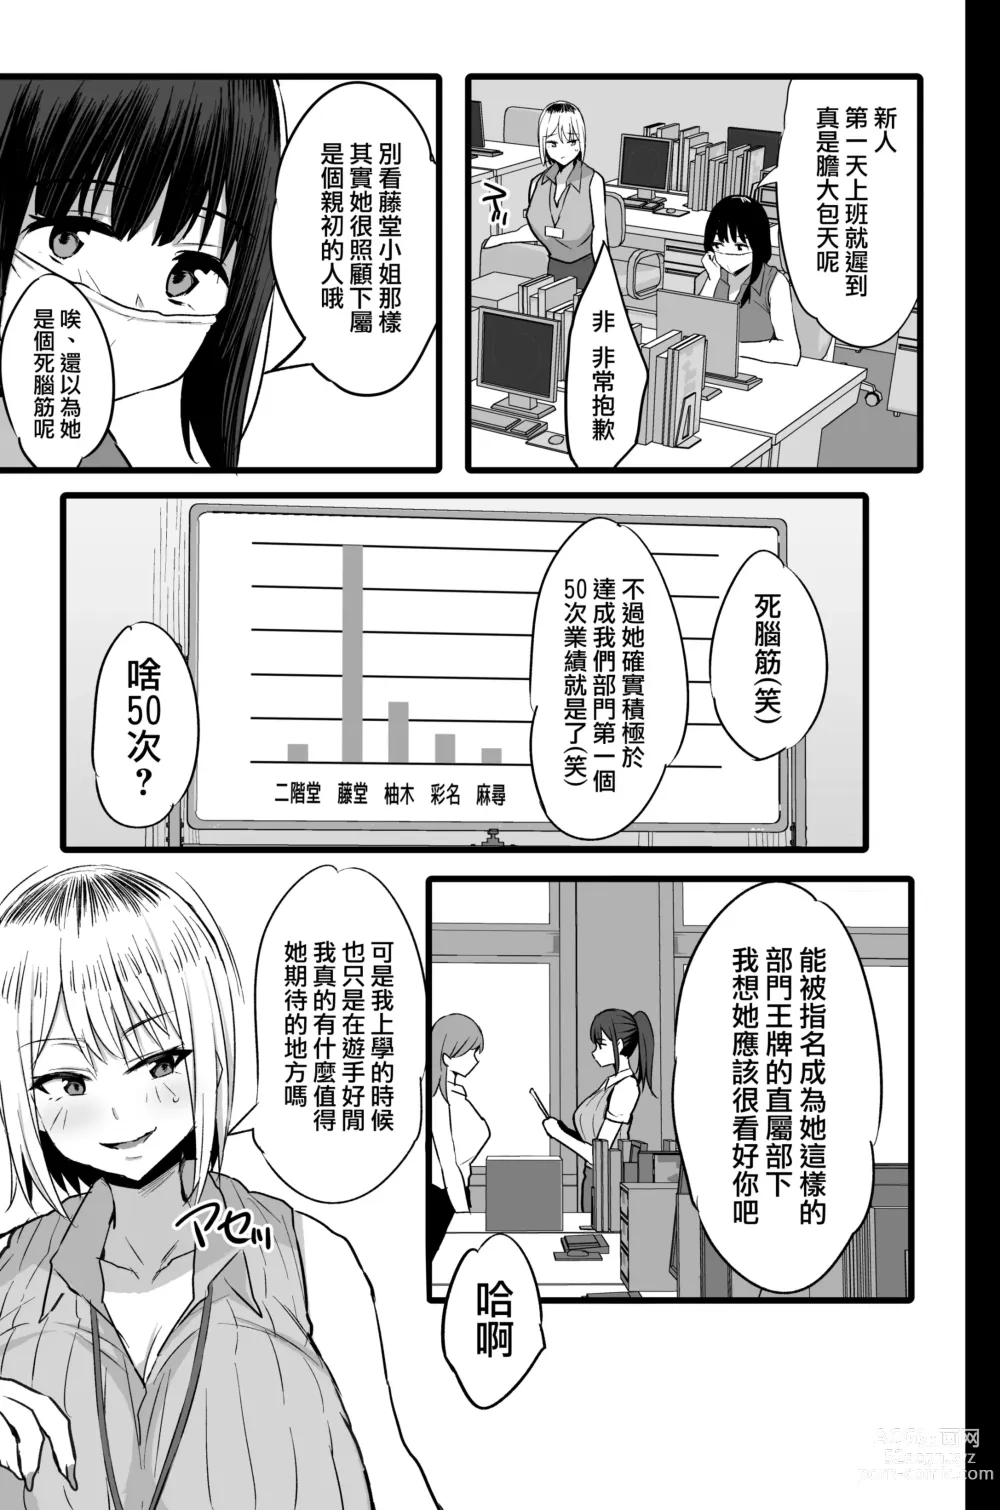 Page 4 of doujinshi 被分配到的部門是慰安科 2